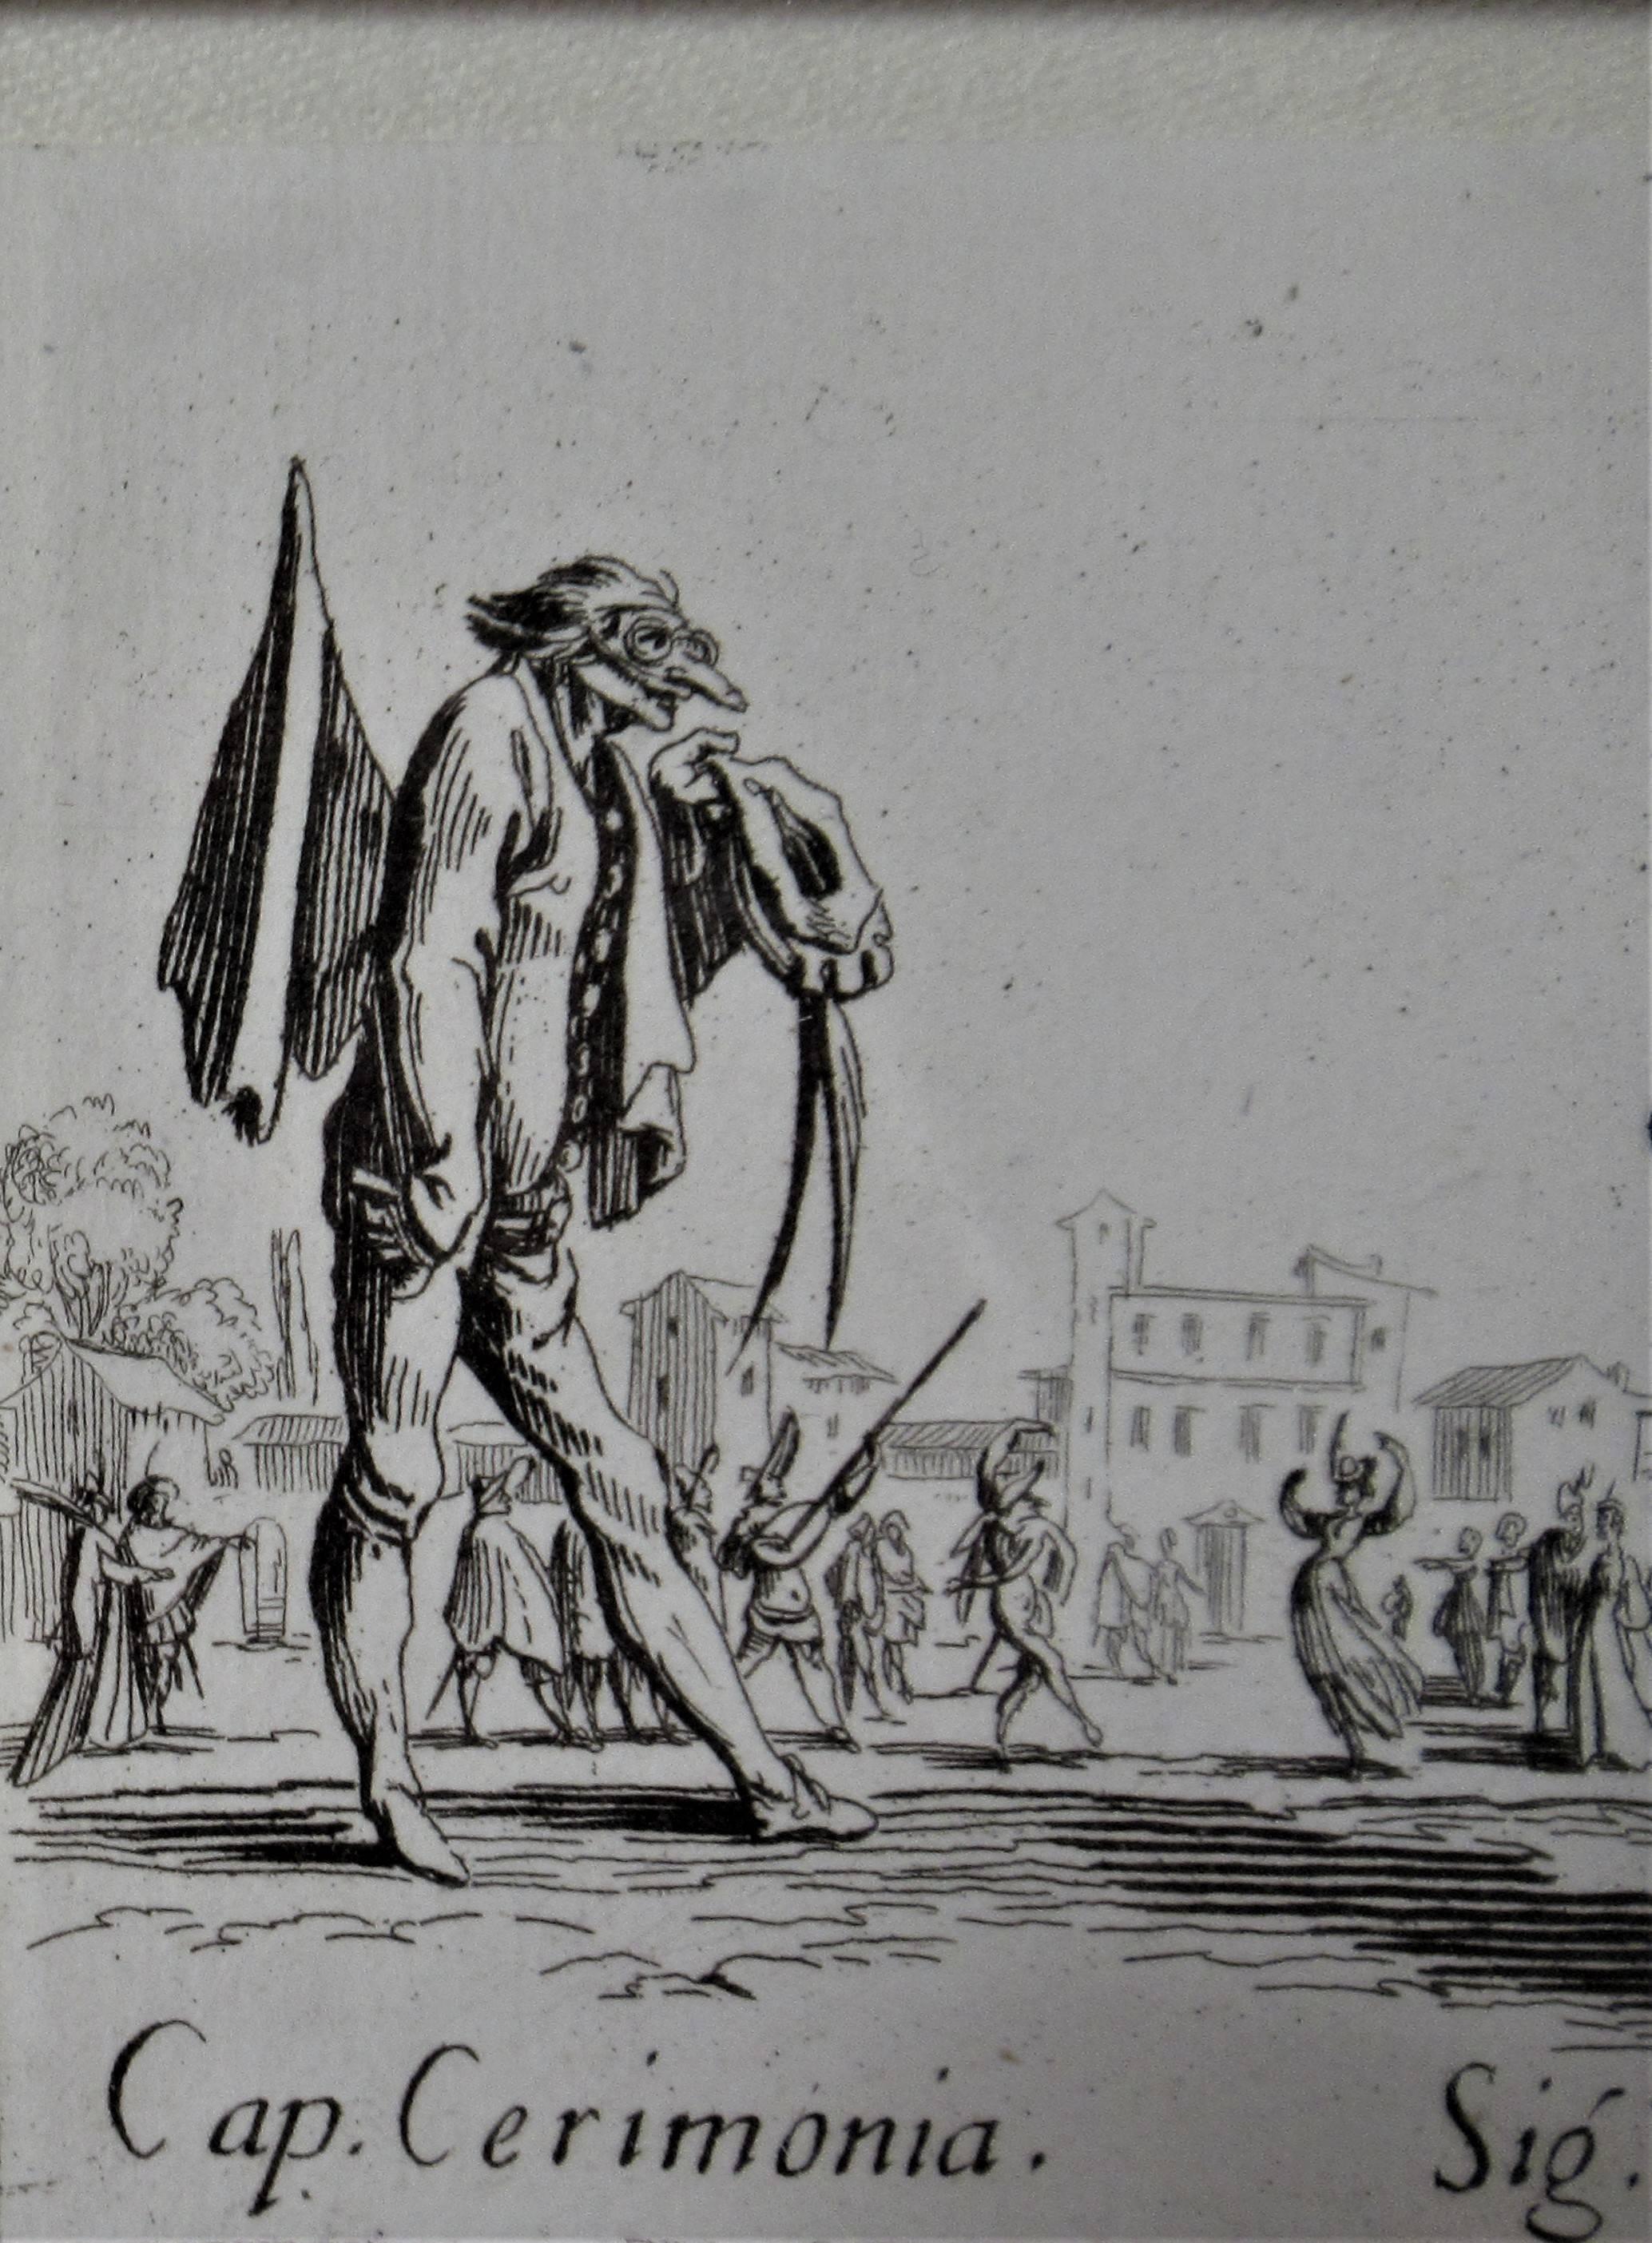 Cap. Cerimonia, Sig. Lauinia - Realist Print by Jacques Callot